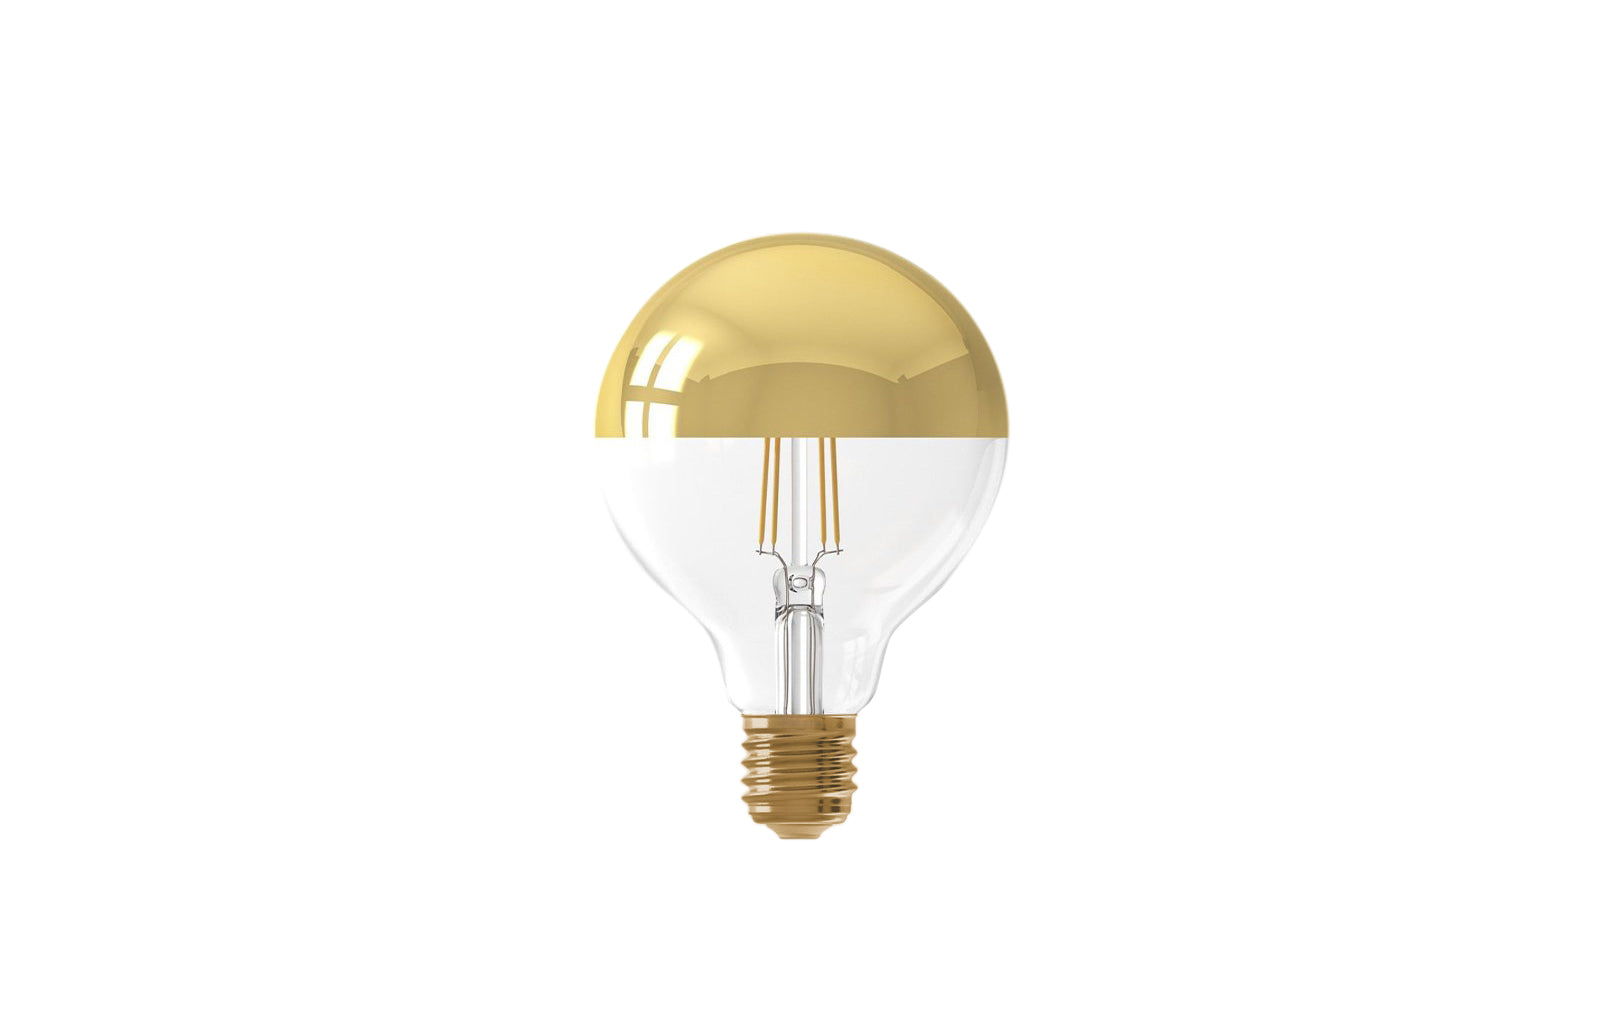 Opus Crown Light Bulb